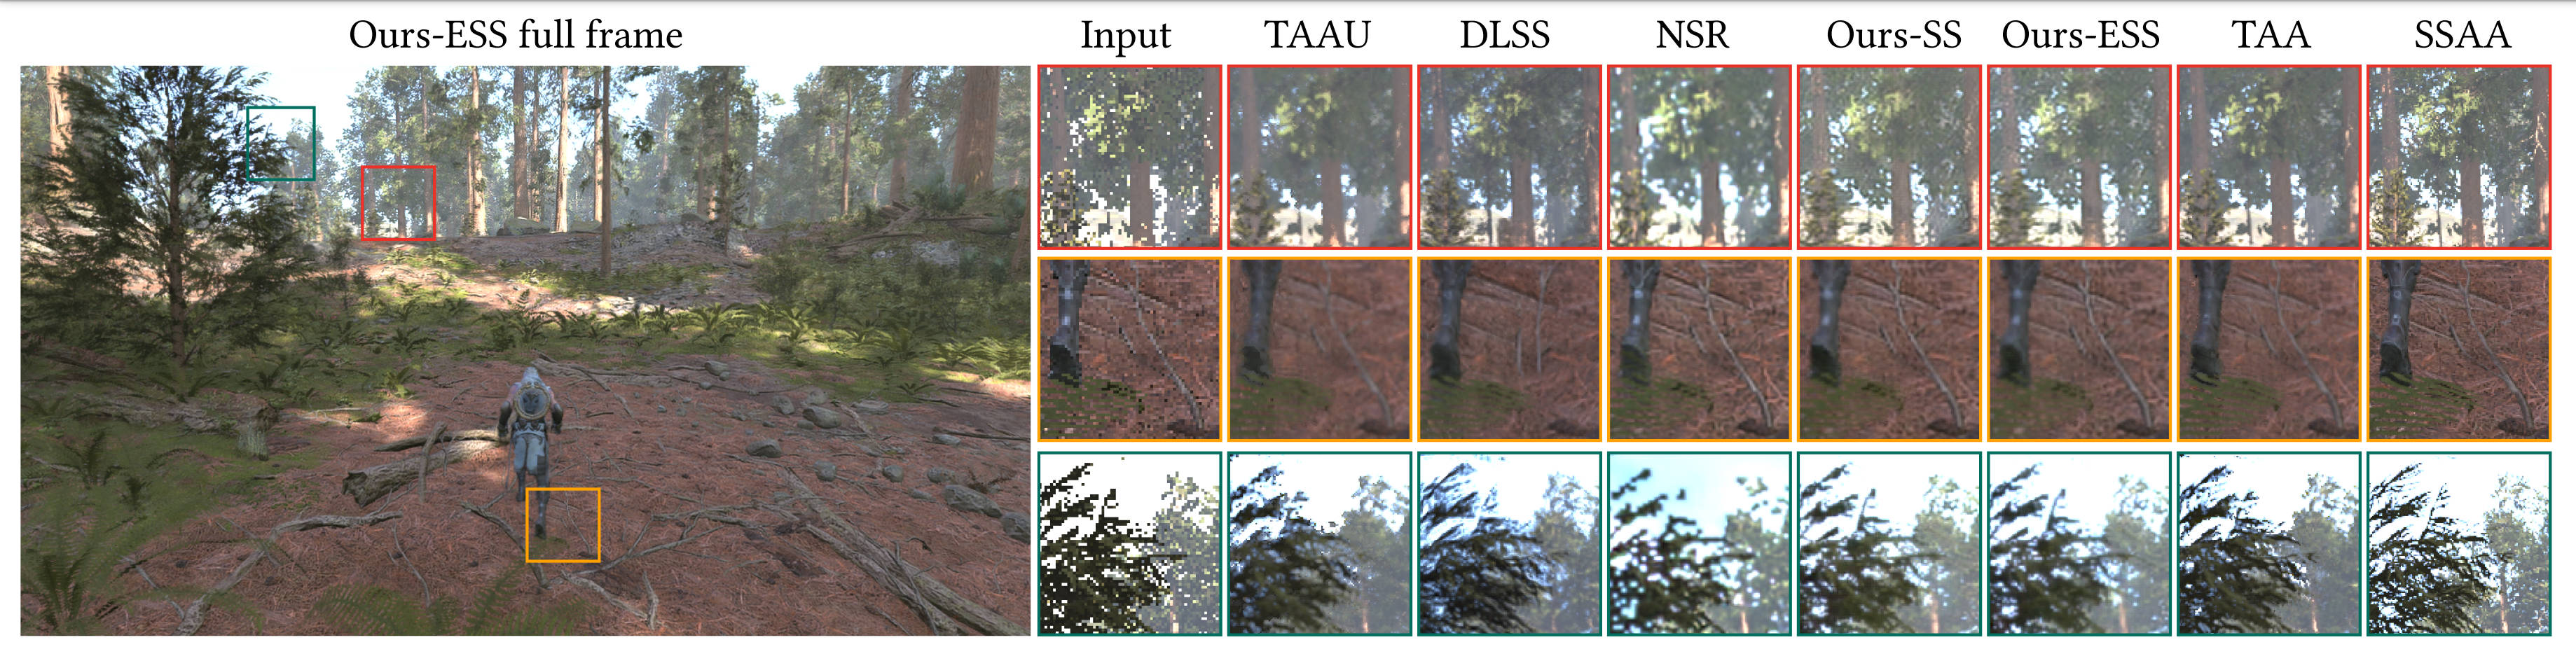 An image comparison between various frame generation algorithms